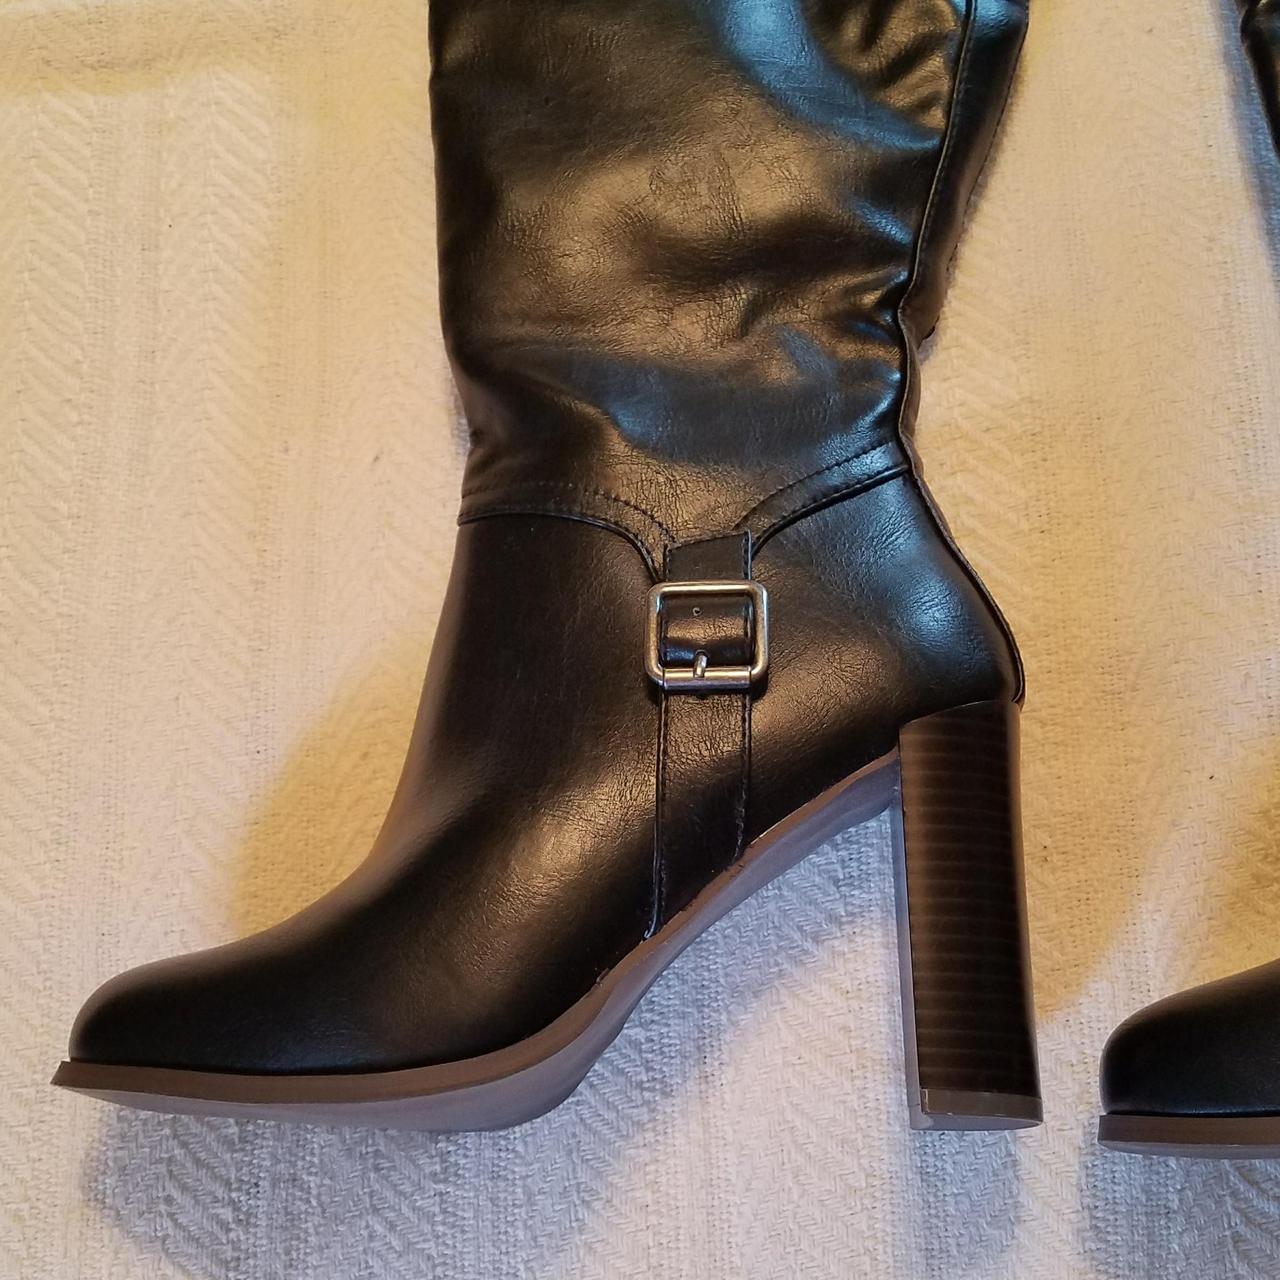 Product Image 2 - Black knee high block heel